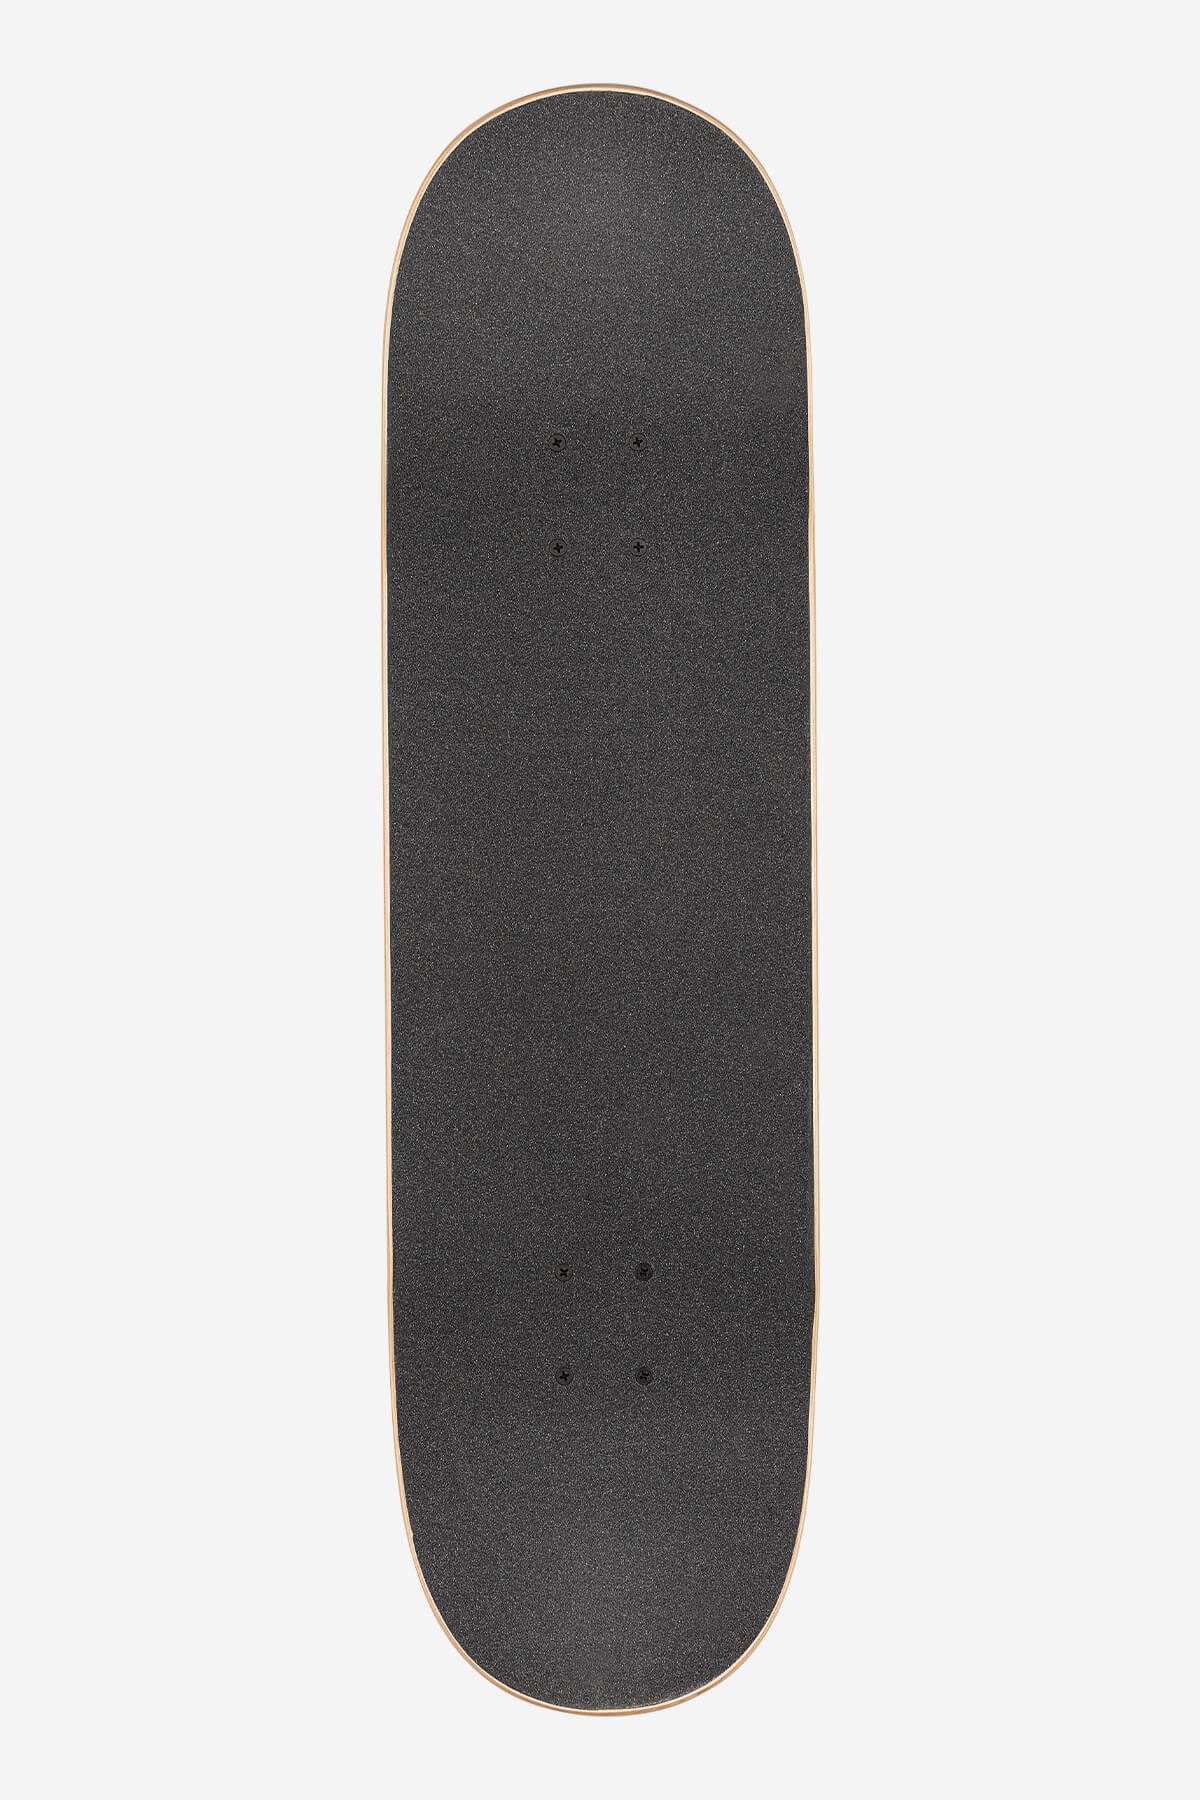 Globe - G1 Stack - Lone Palm - 8.0" Complete Skateboard